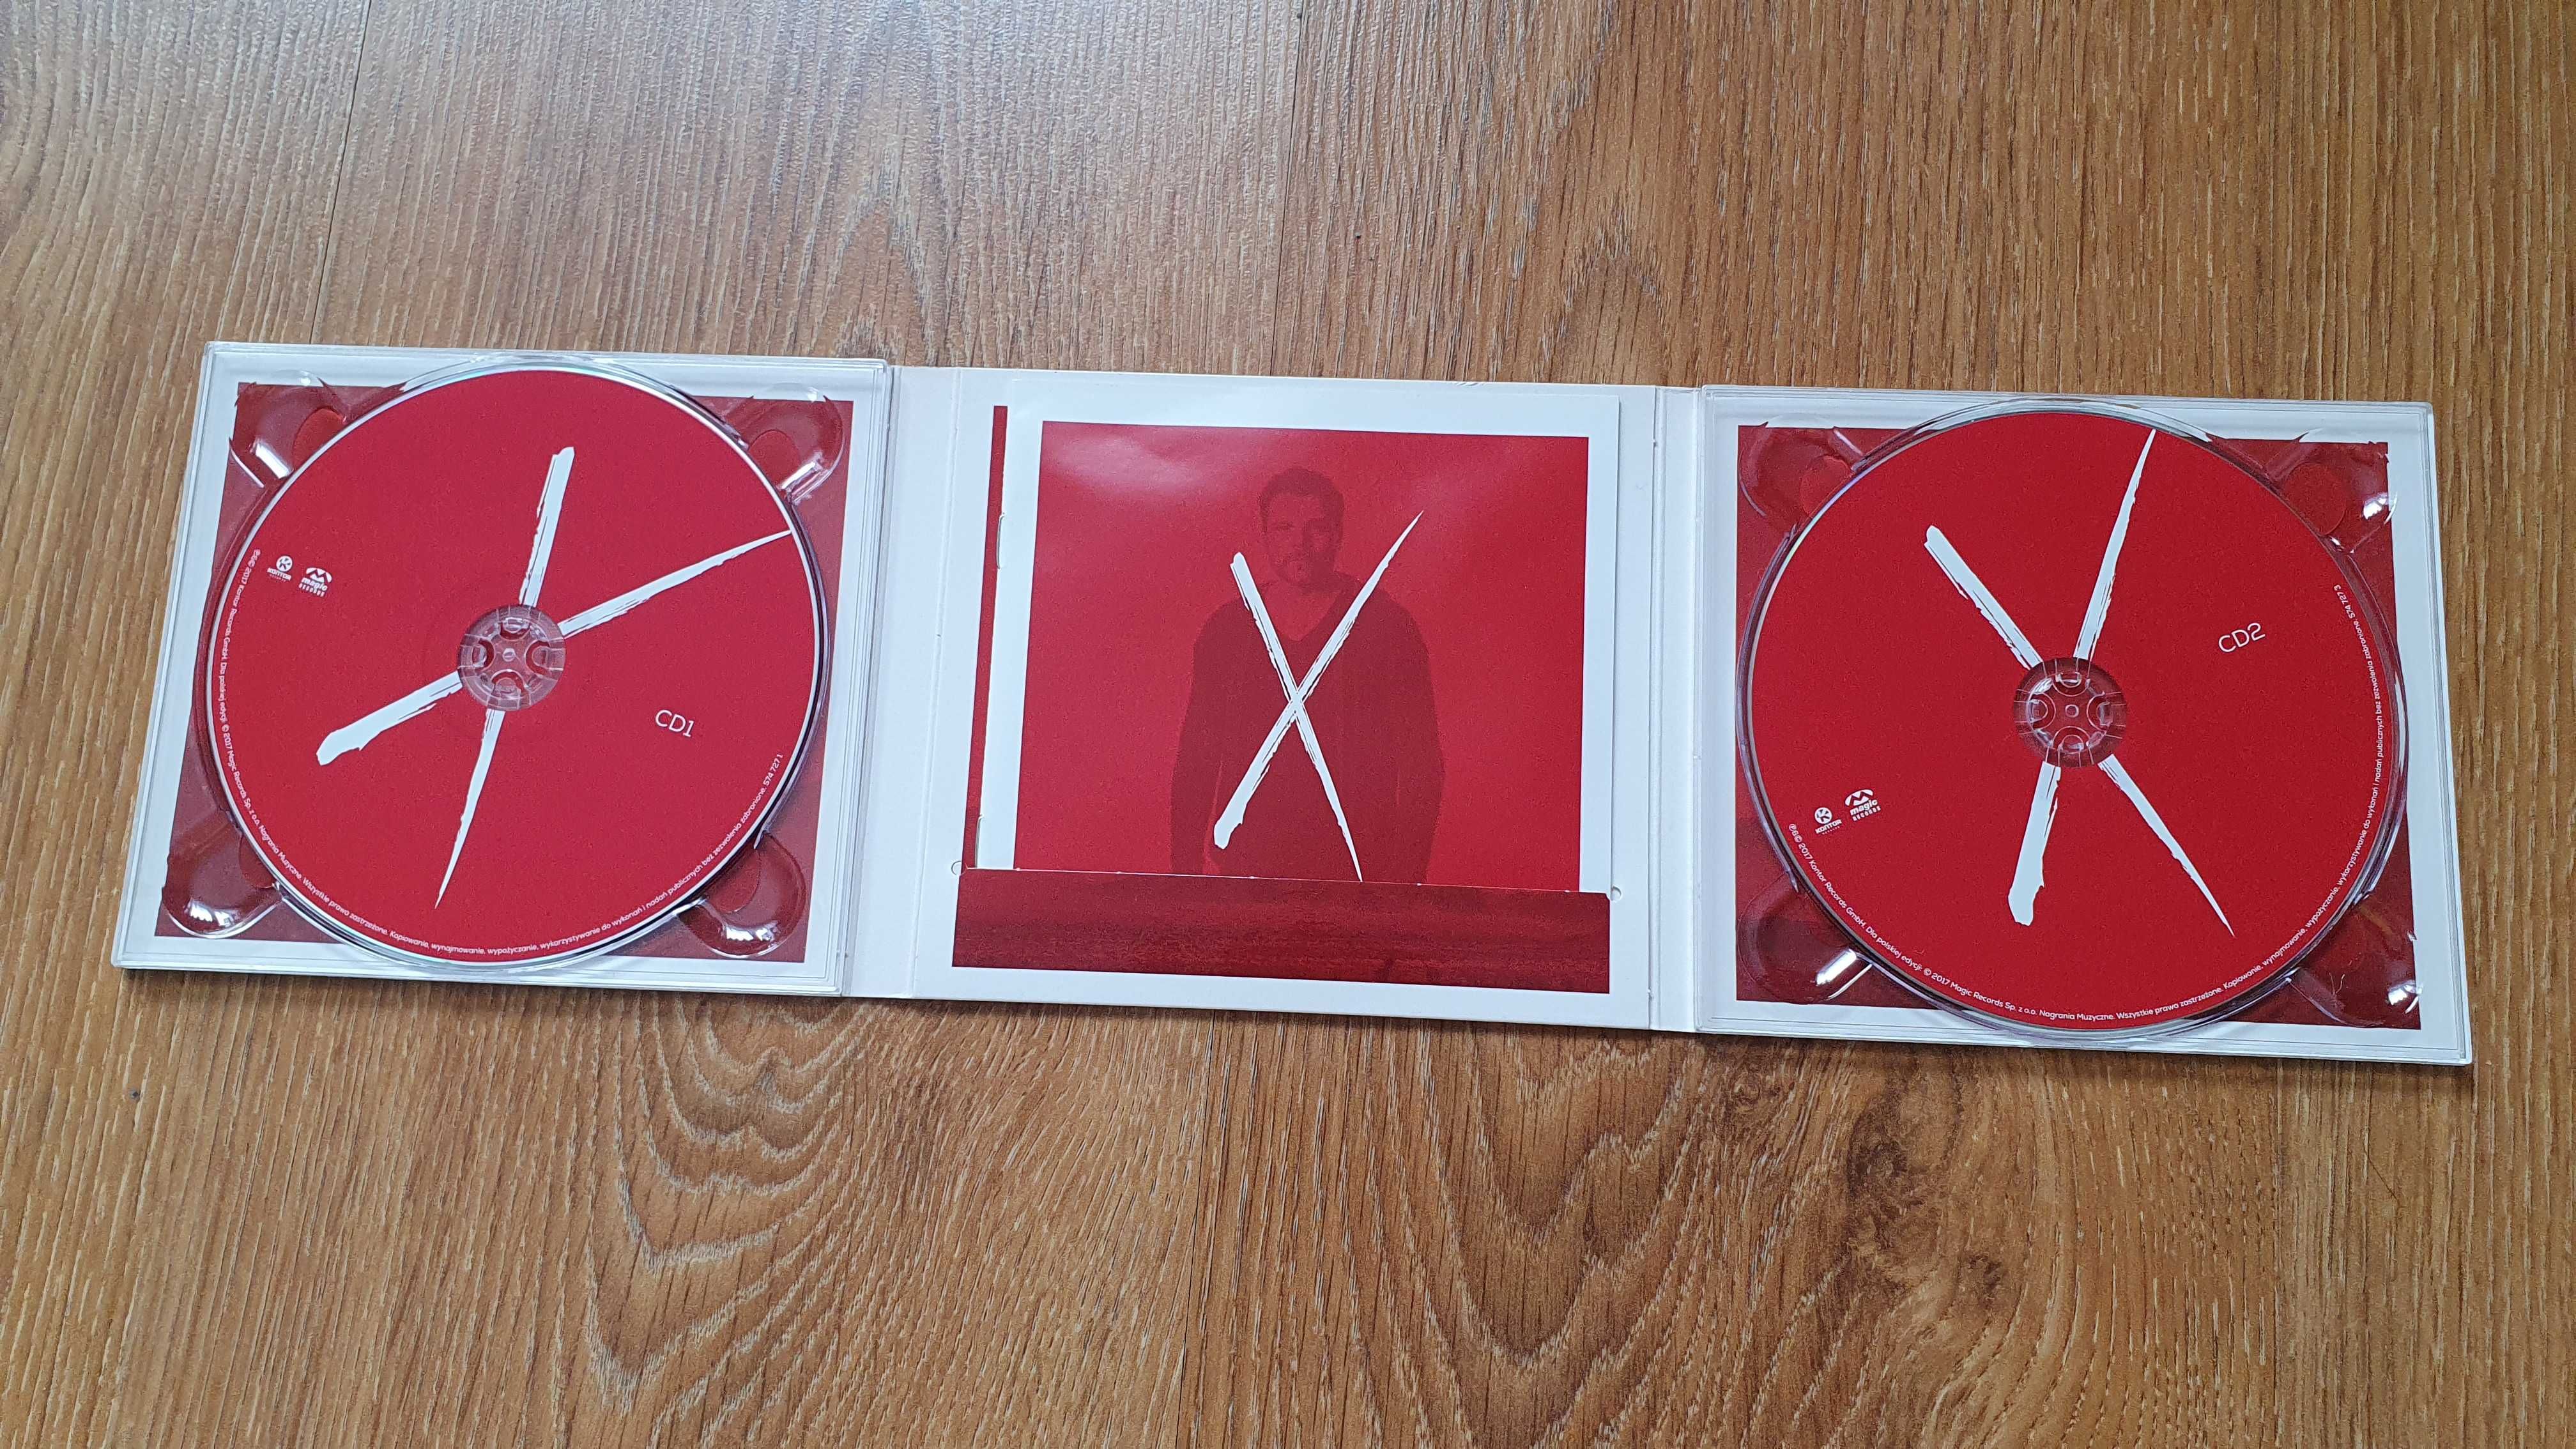 ATB - Next [CD] 2xCD